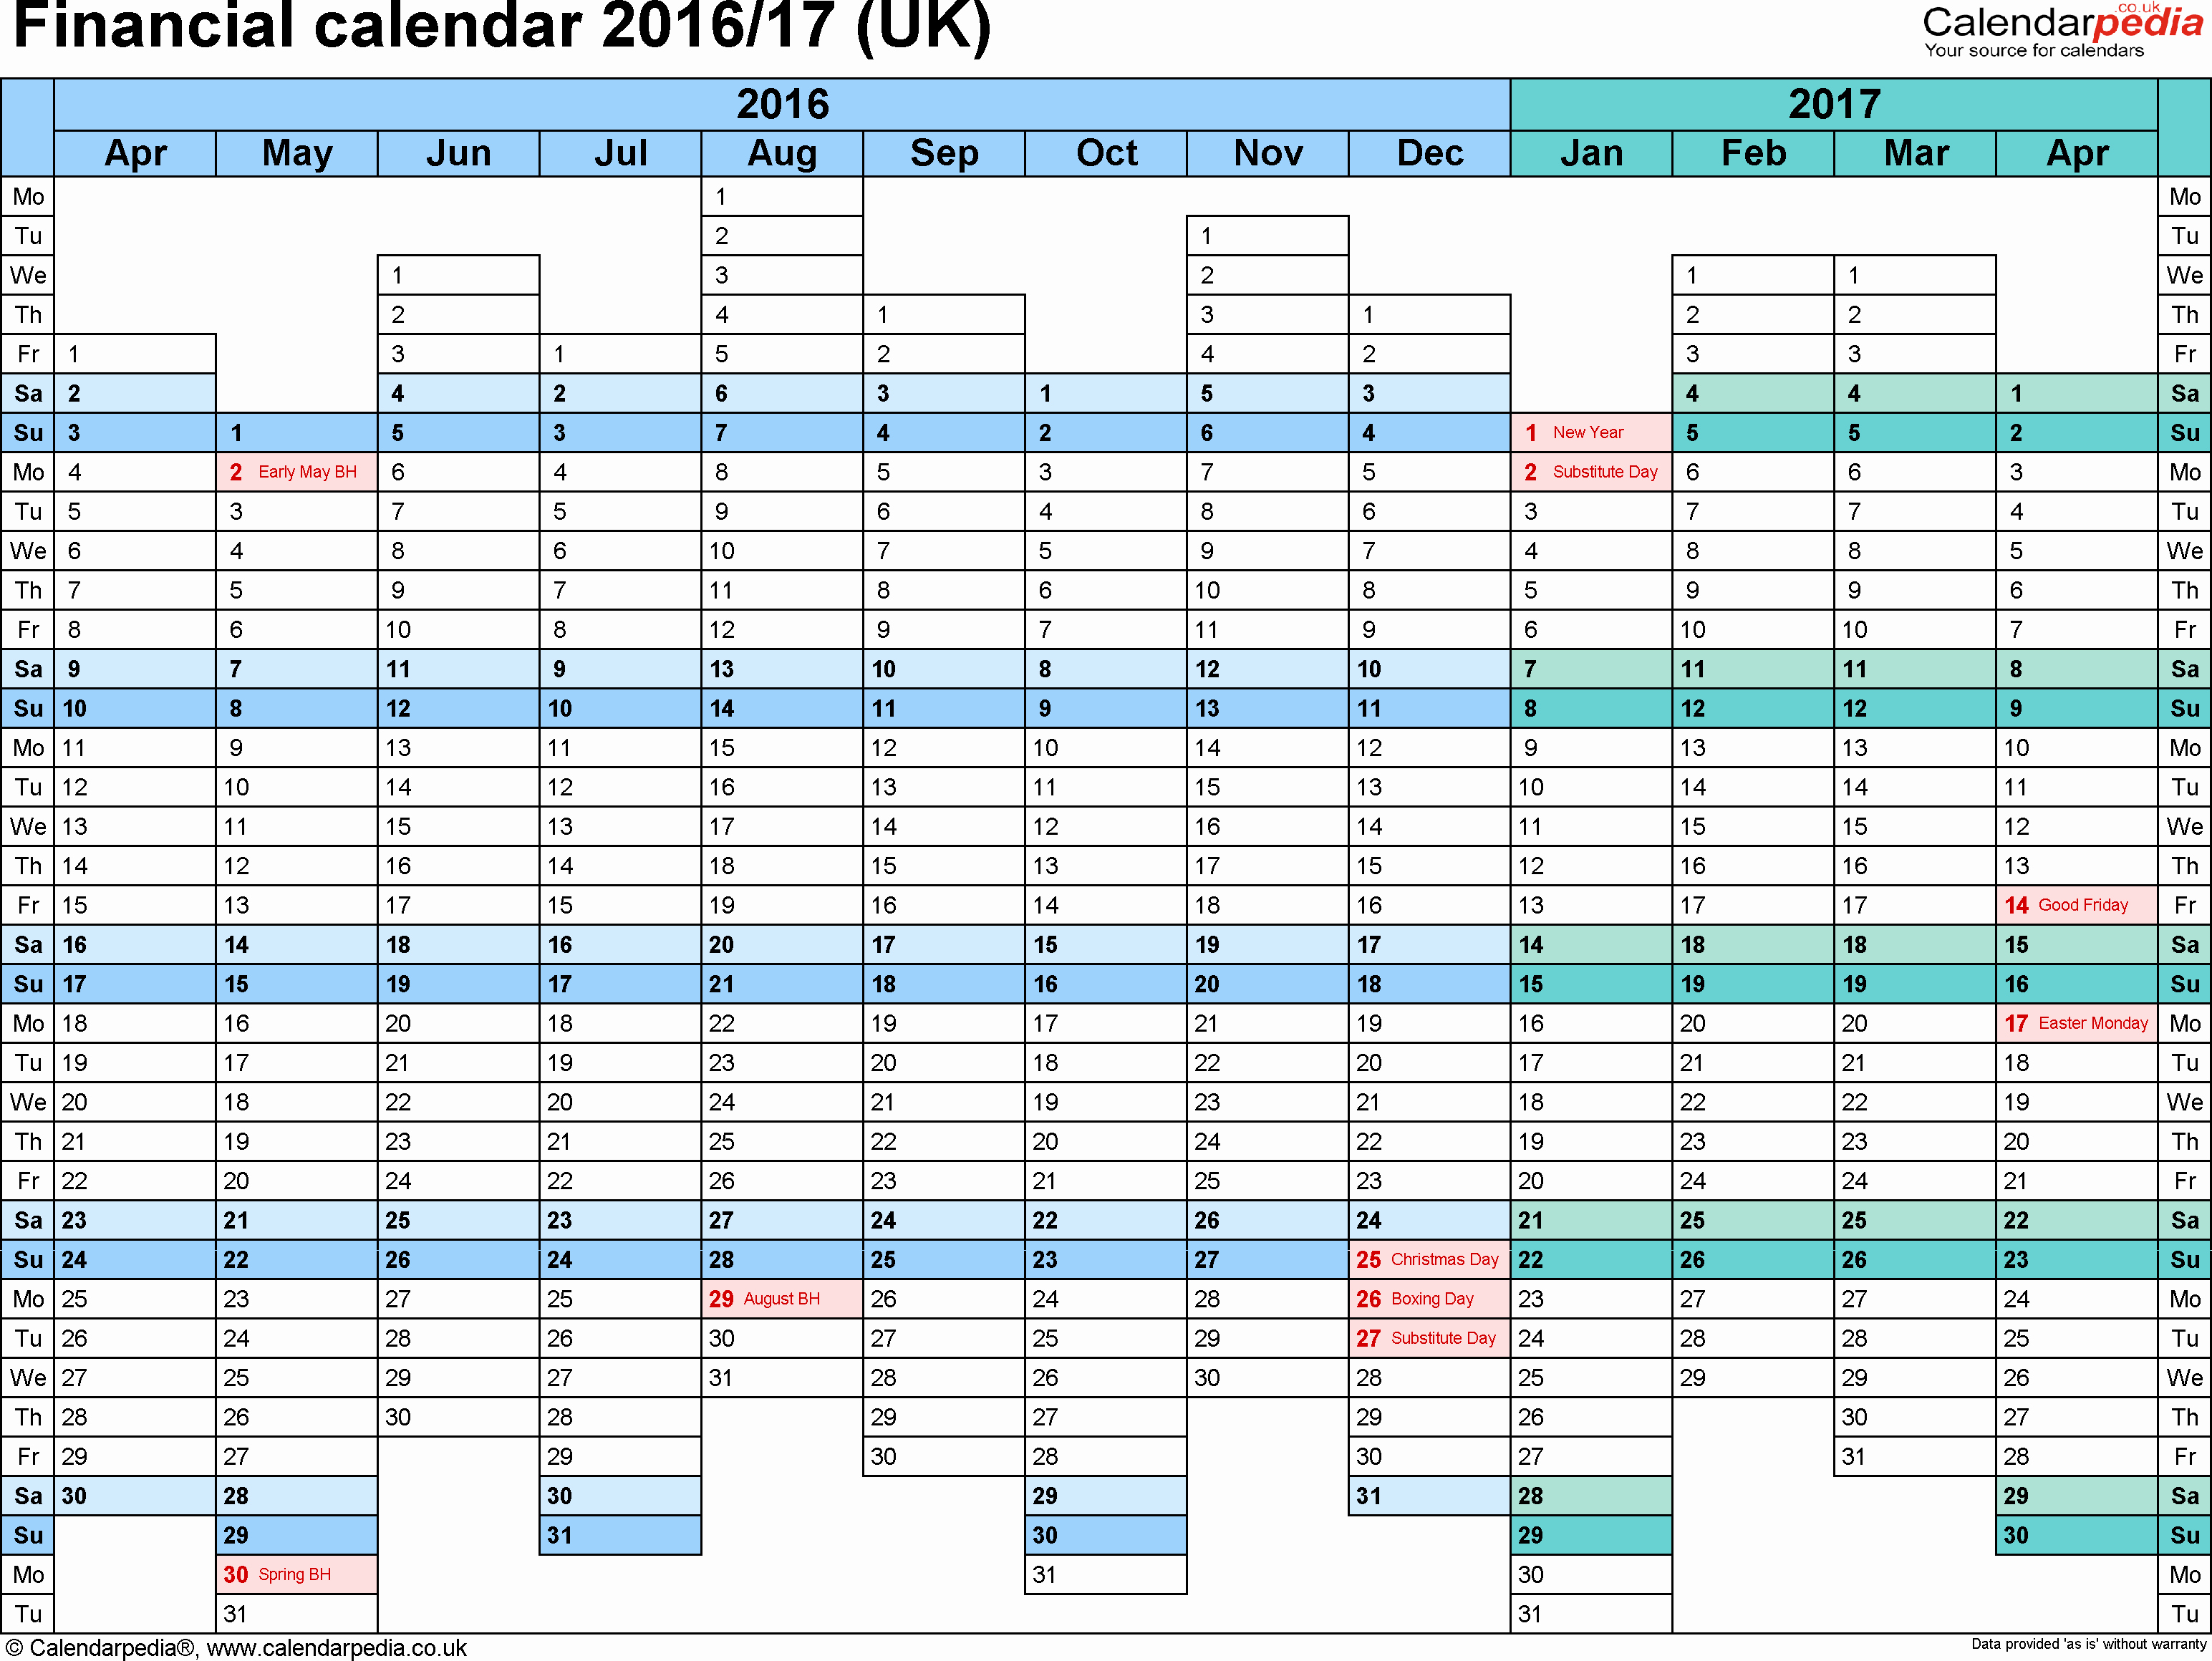 Blank Calendar 2016-17 Luxury Financial Calendars 2016 17 Uk In Pdf format